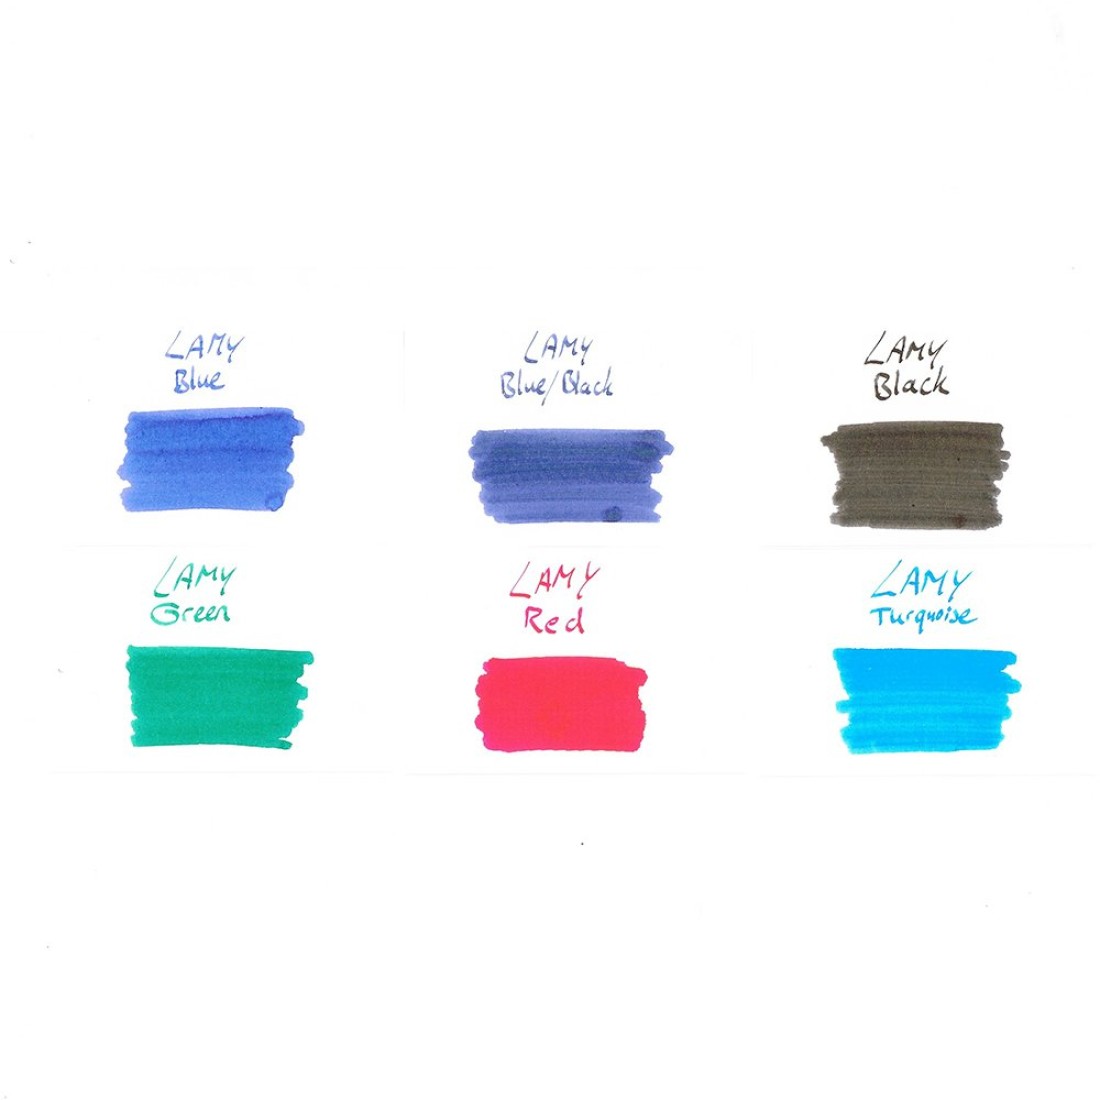 Graan Kent radar Lamy Ink - Ink Cartridges (7 colors) | Appelboom.com